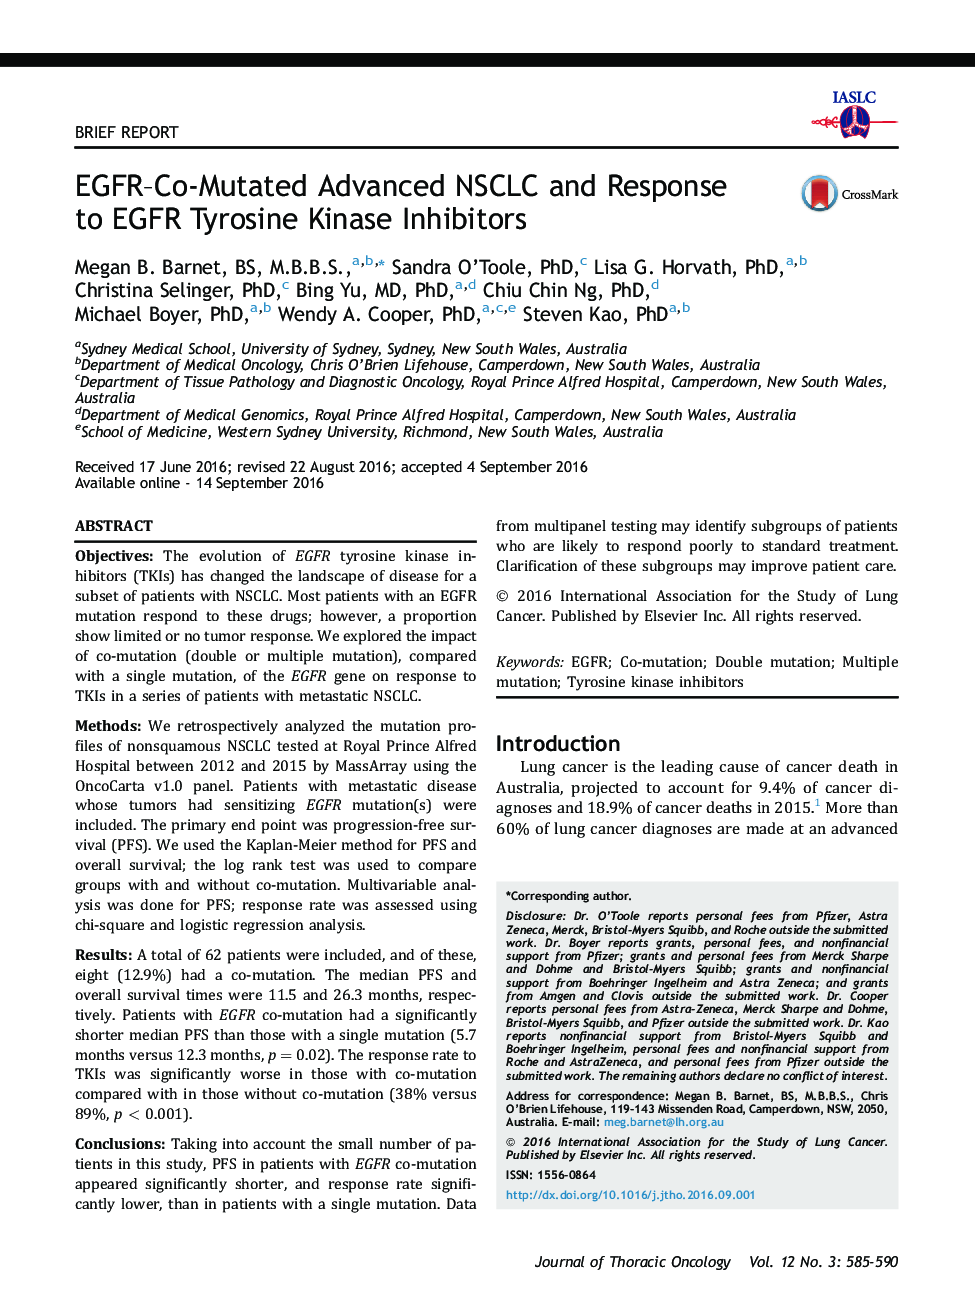 EGFR-Co-Mutated Advanced NSCLC and Response toÂ EGFR Tyrosine Kinase Inhibitors